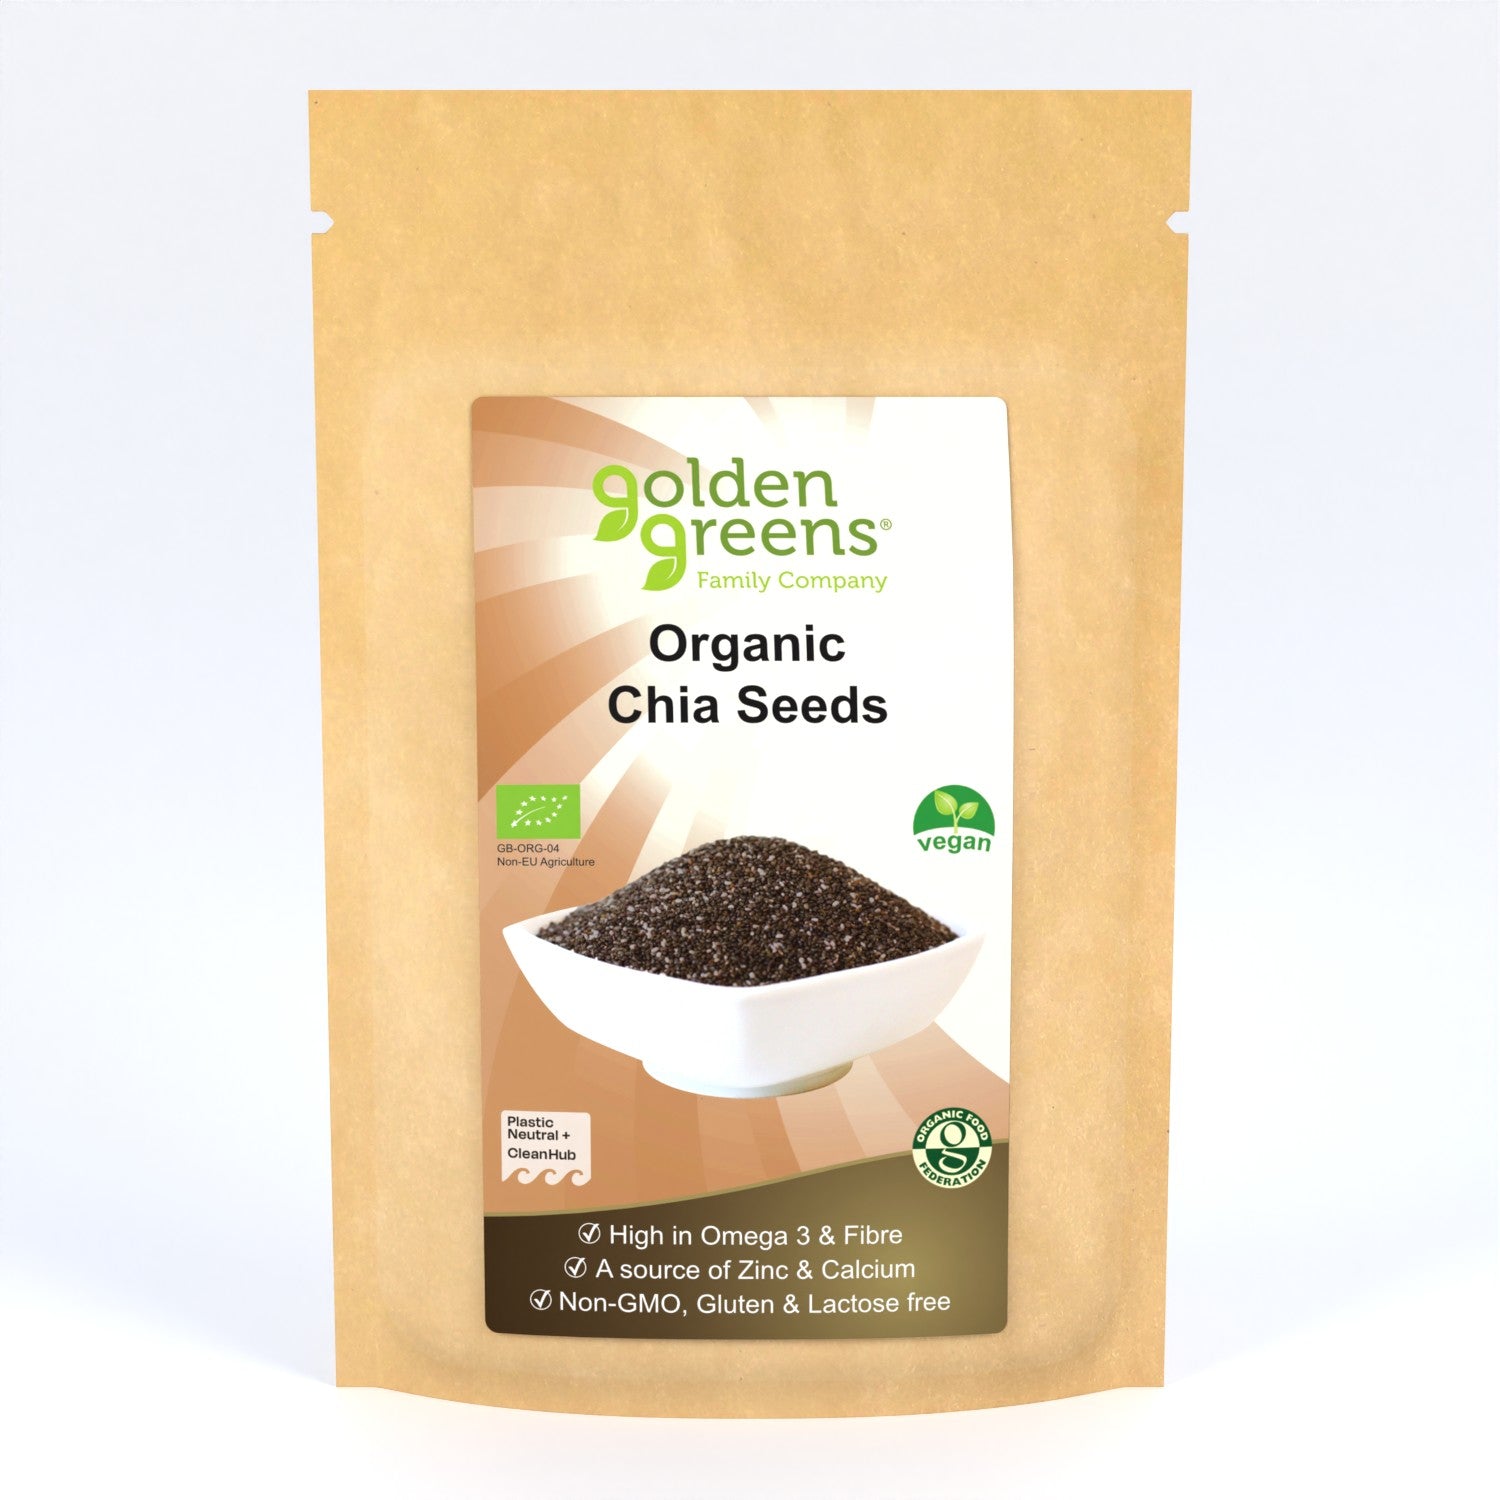 View Organic Chia Seeds information